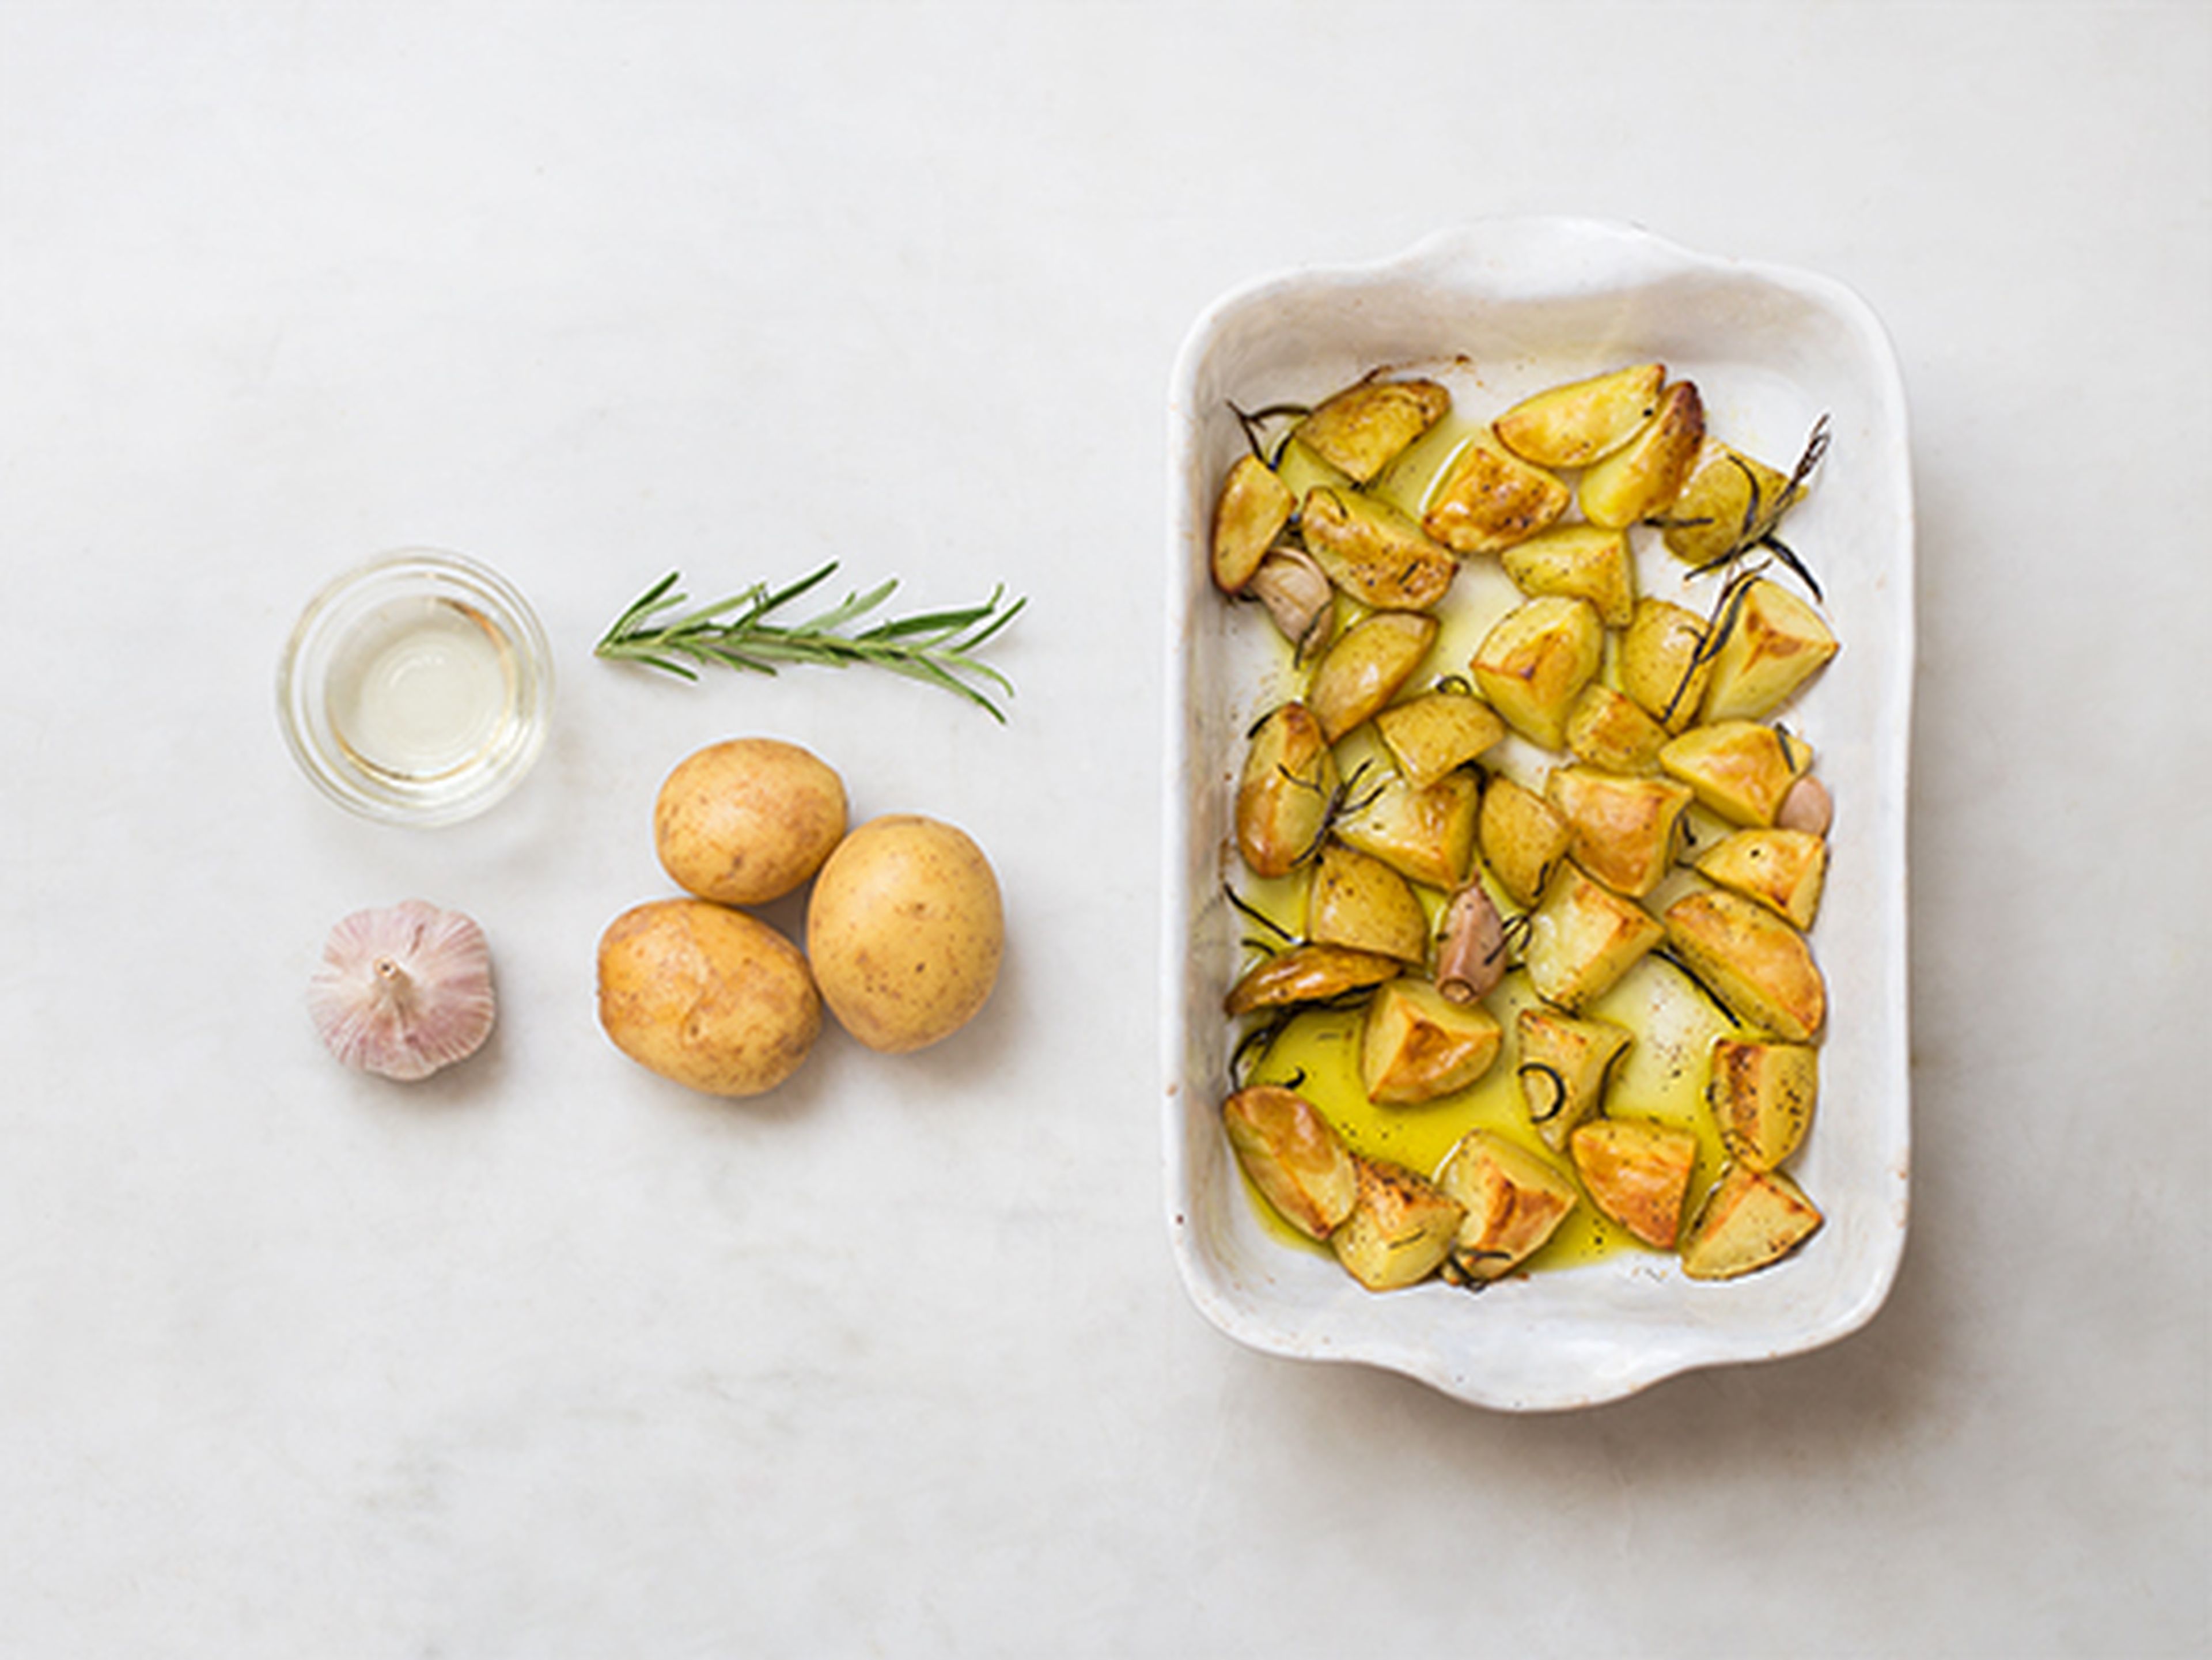 Oven-roasted rosemary potatoes